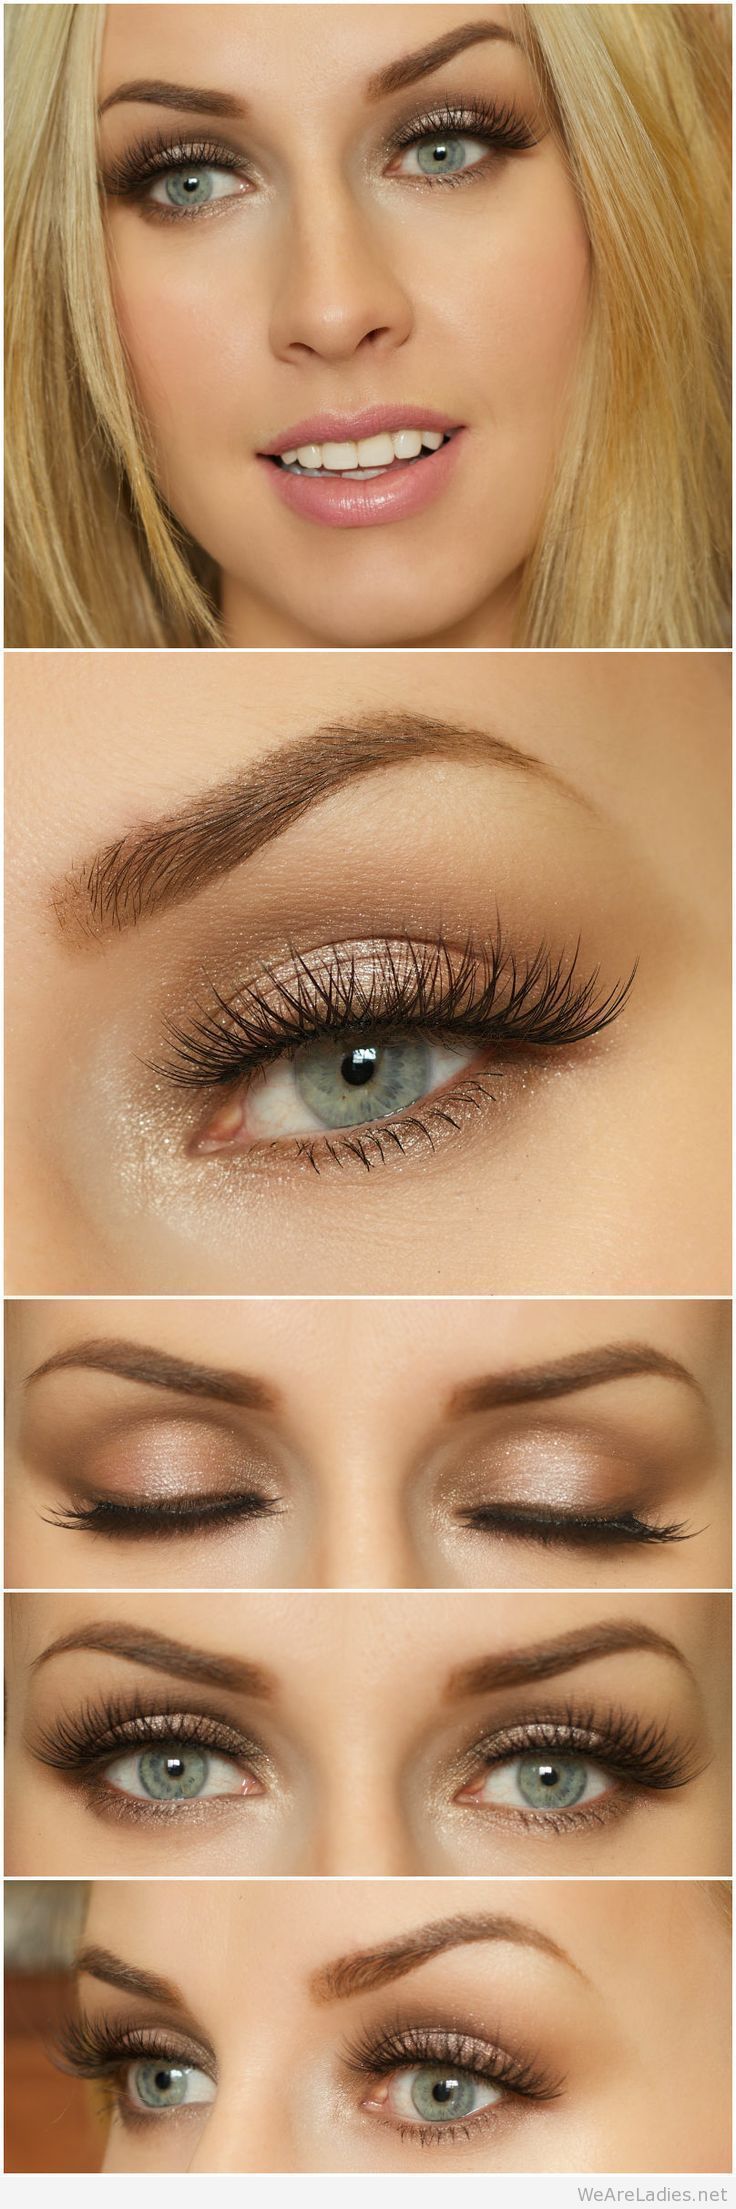 Brown-Makeup-For-Blue-Eyes-lifestylezz.jpg